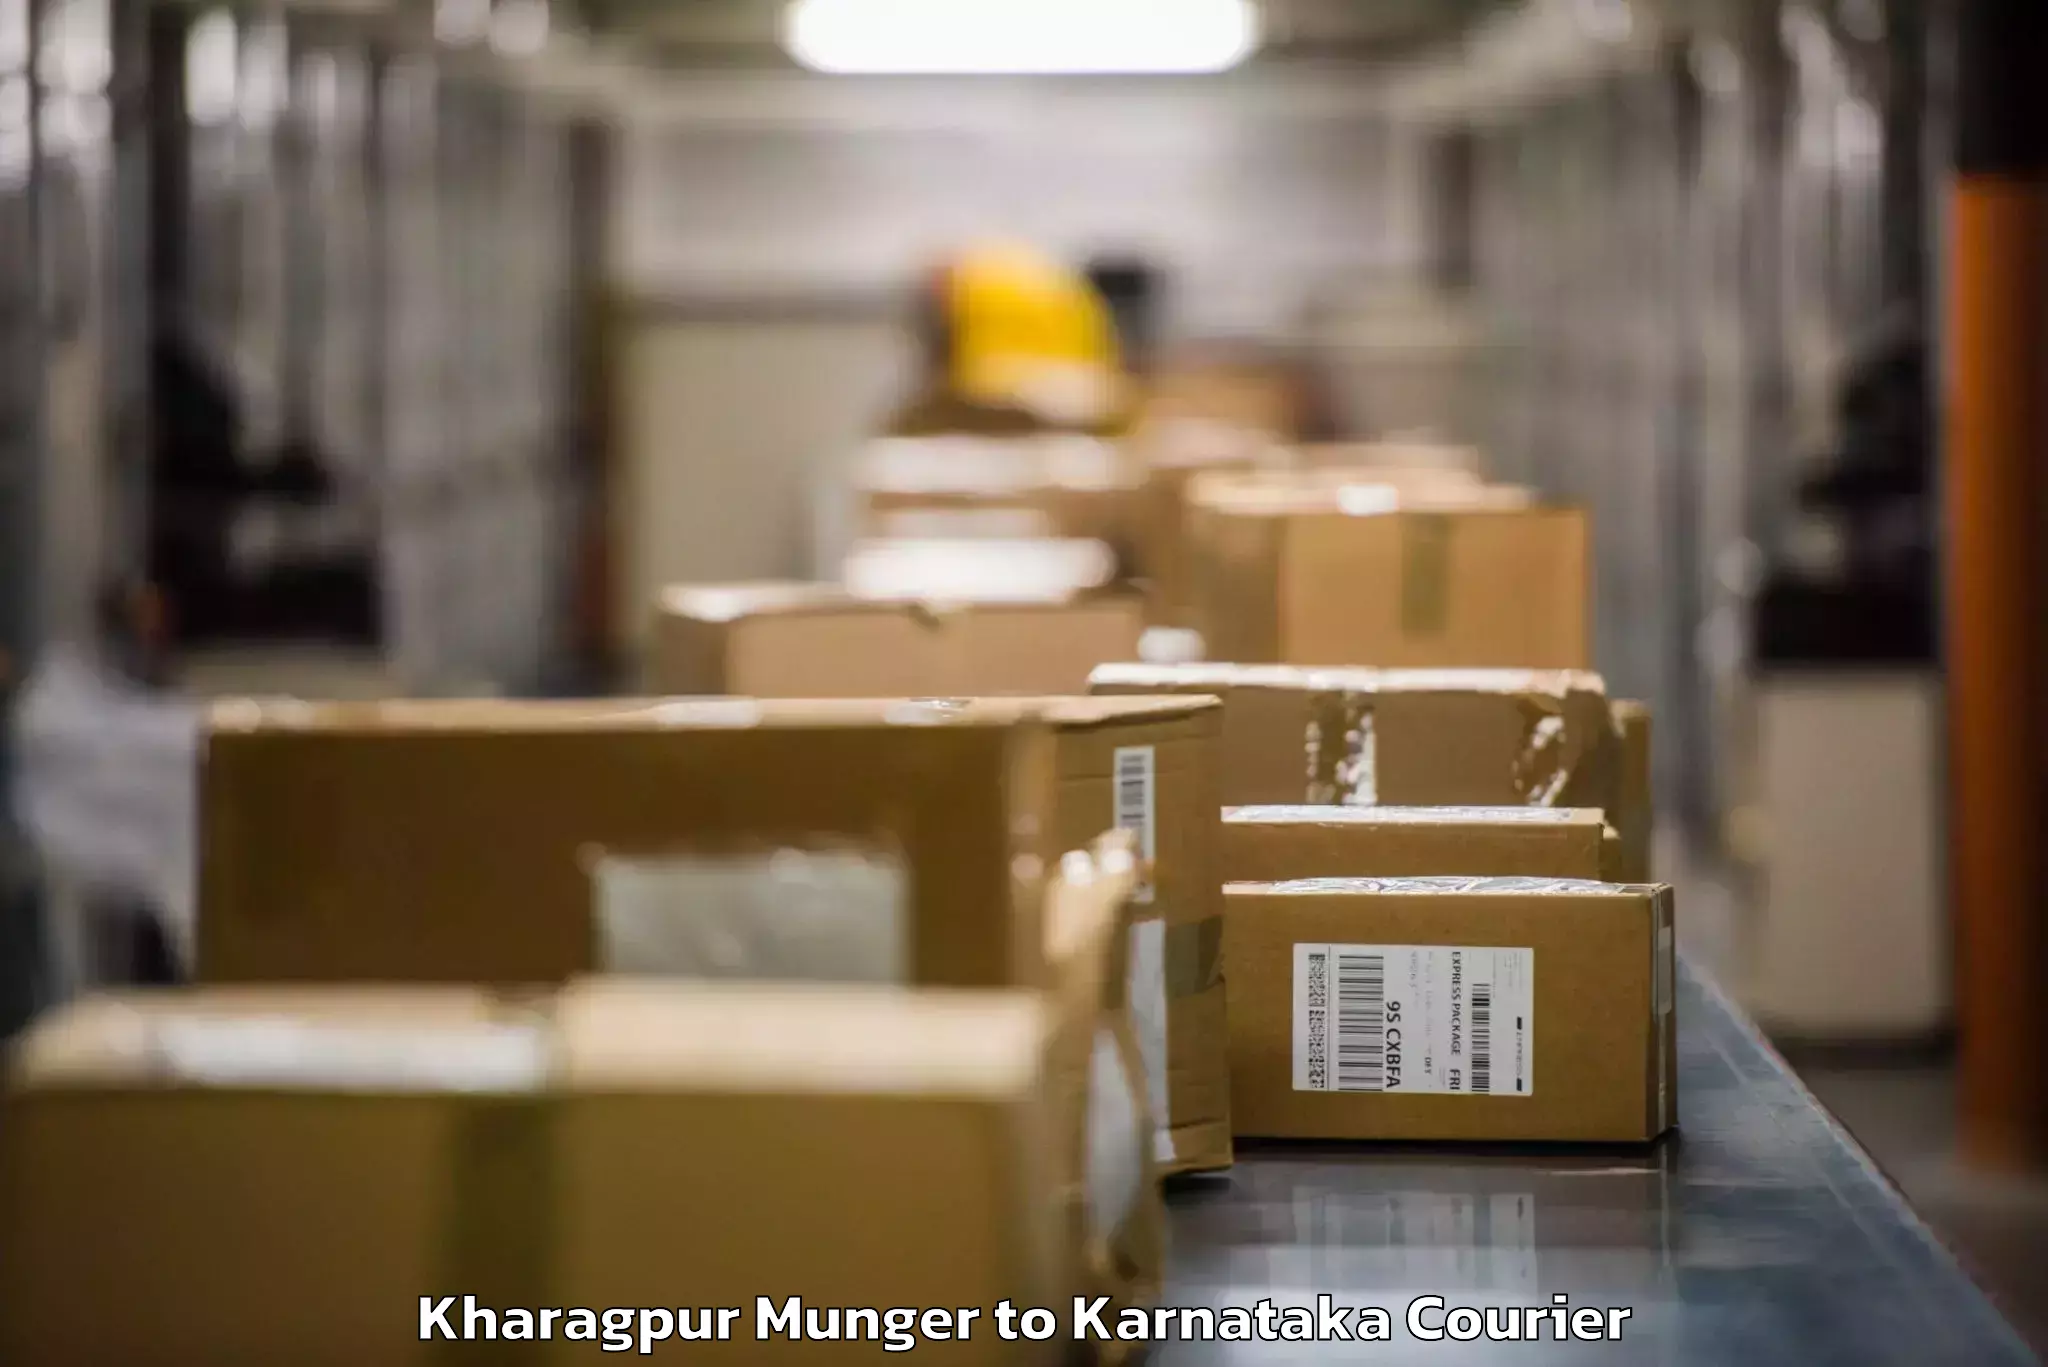 Luggage delivery app Kharagpur Munger to Belagavi